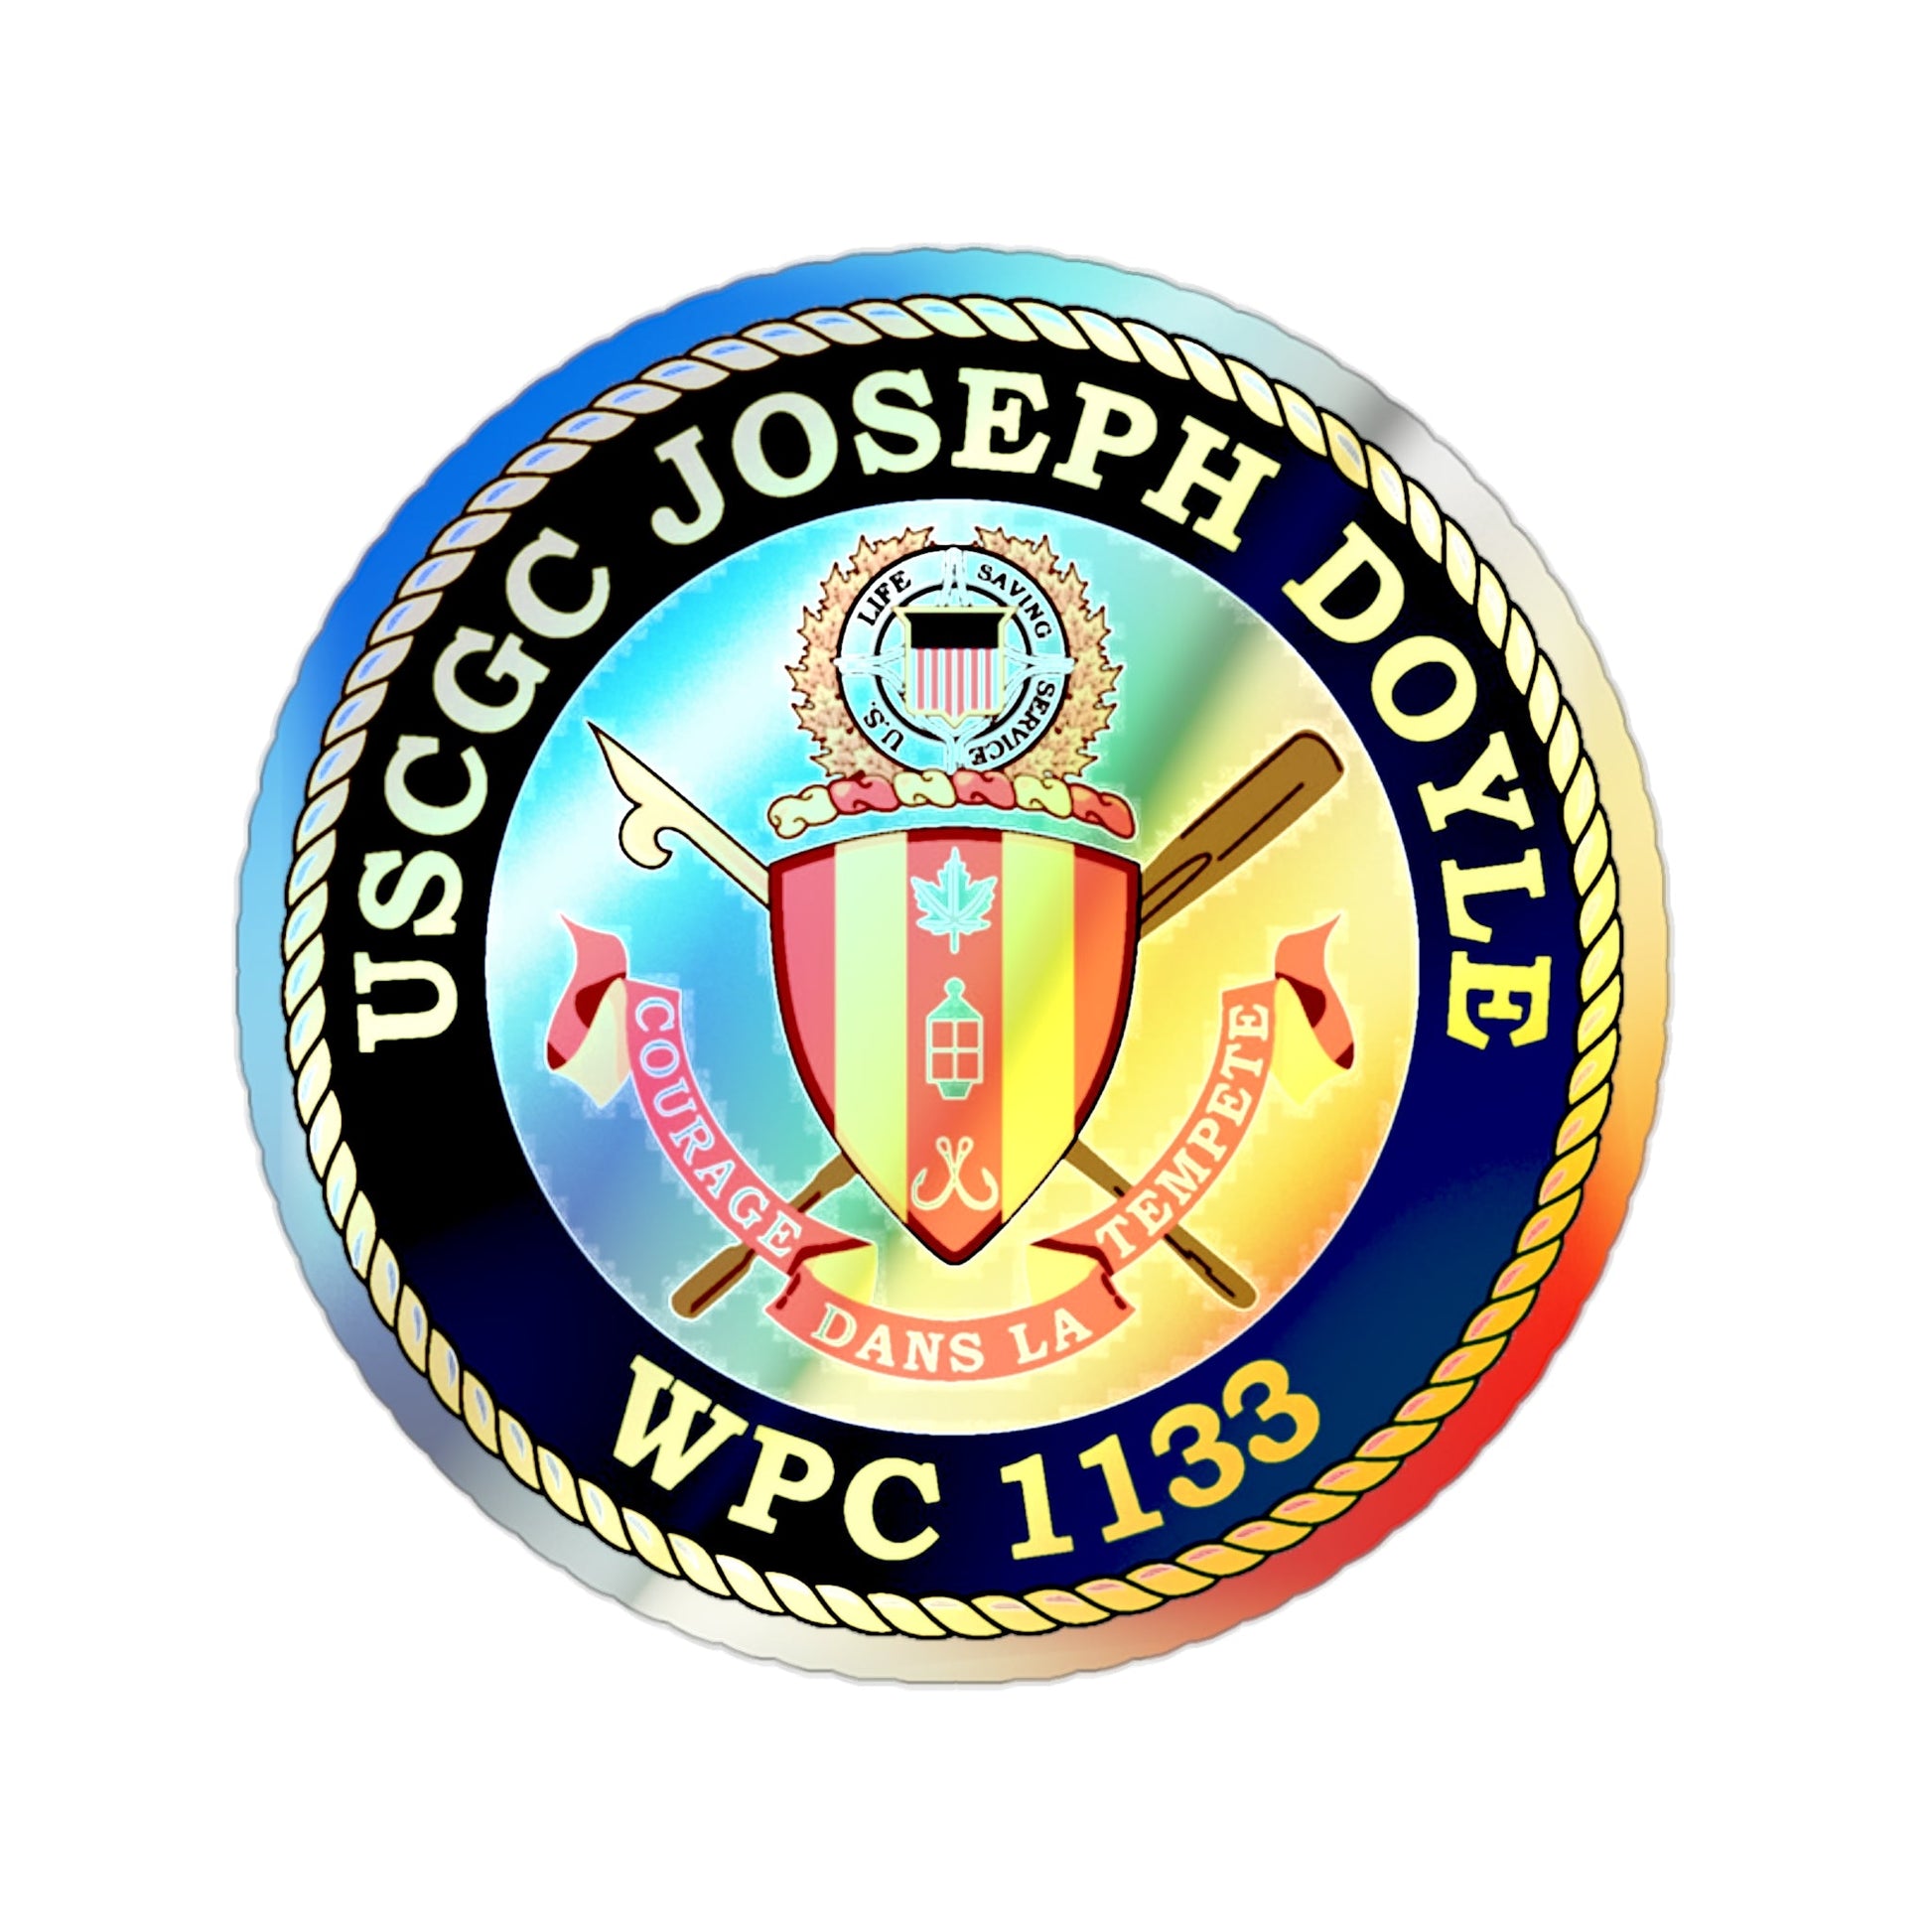 USCG C JOSEPH DOYLE W PC 1133 (U.S. Coast Guard) Holographic STICKER Die-Cut Vinyl Decal-2 Inch-The Sticker Space